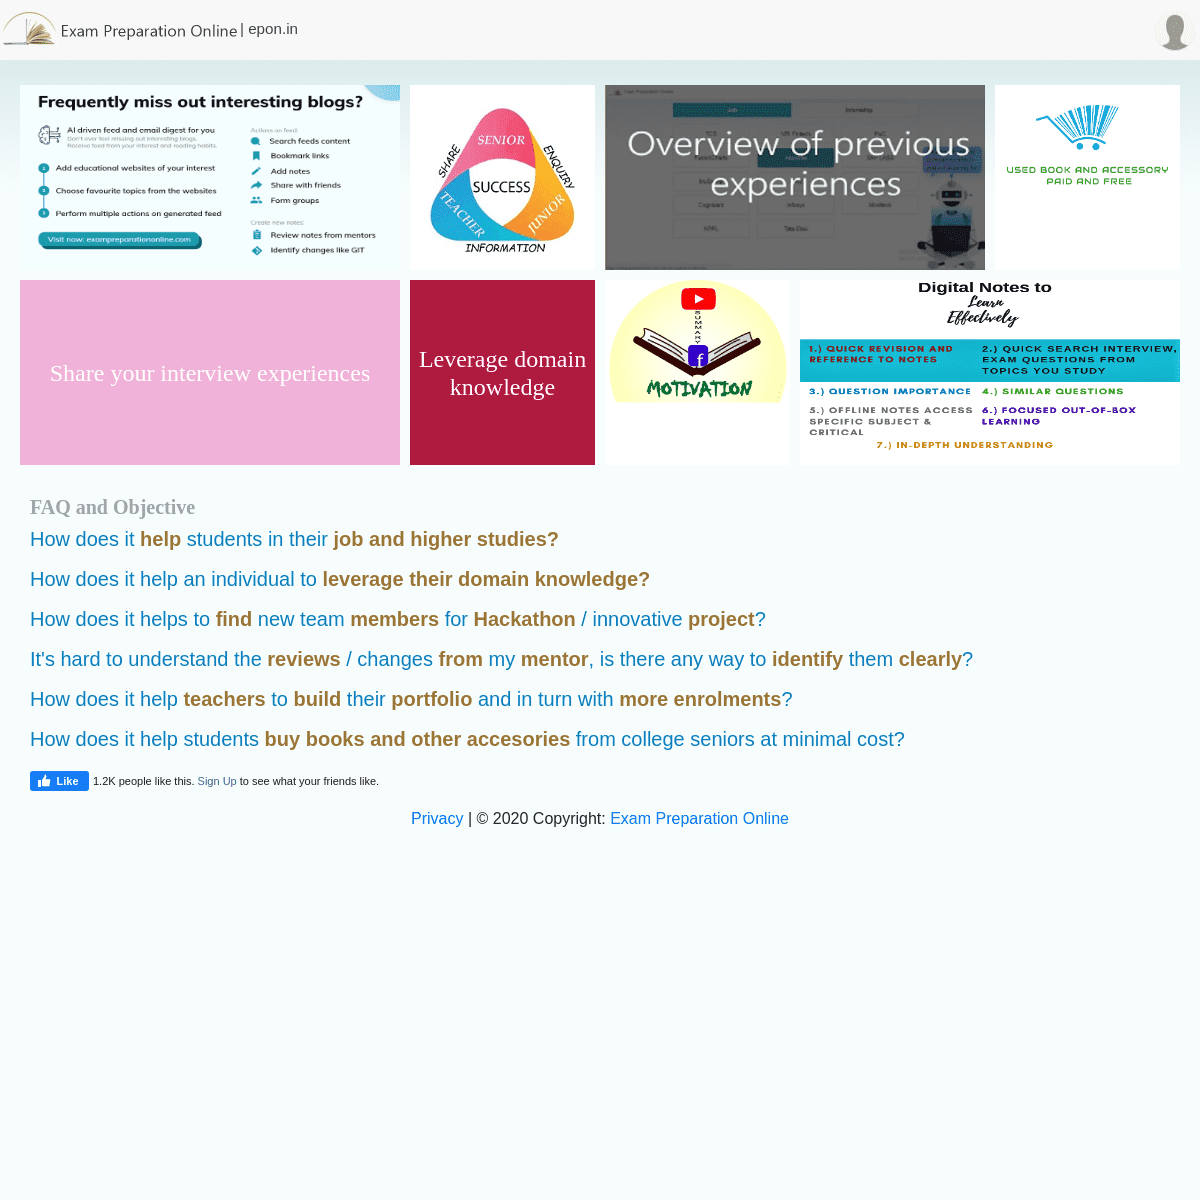 A complete backup of exampreparationonline.com